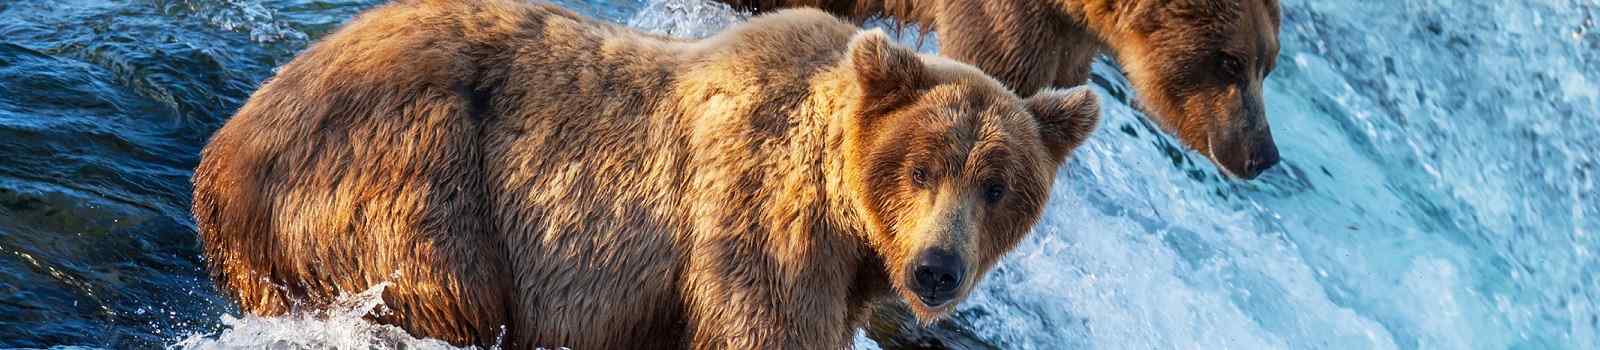  Alaska Brown bear on Alaska